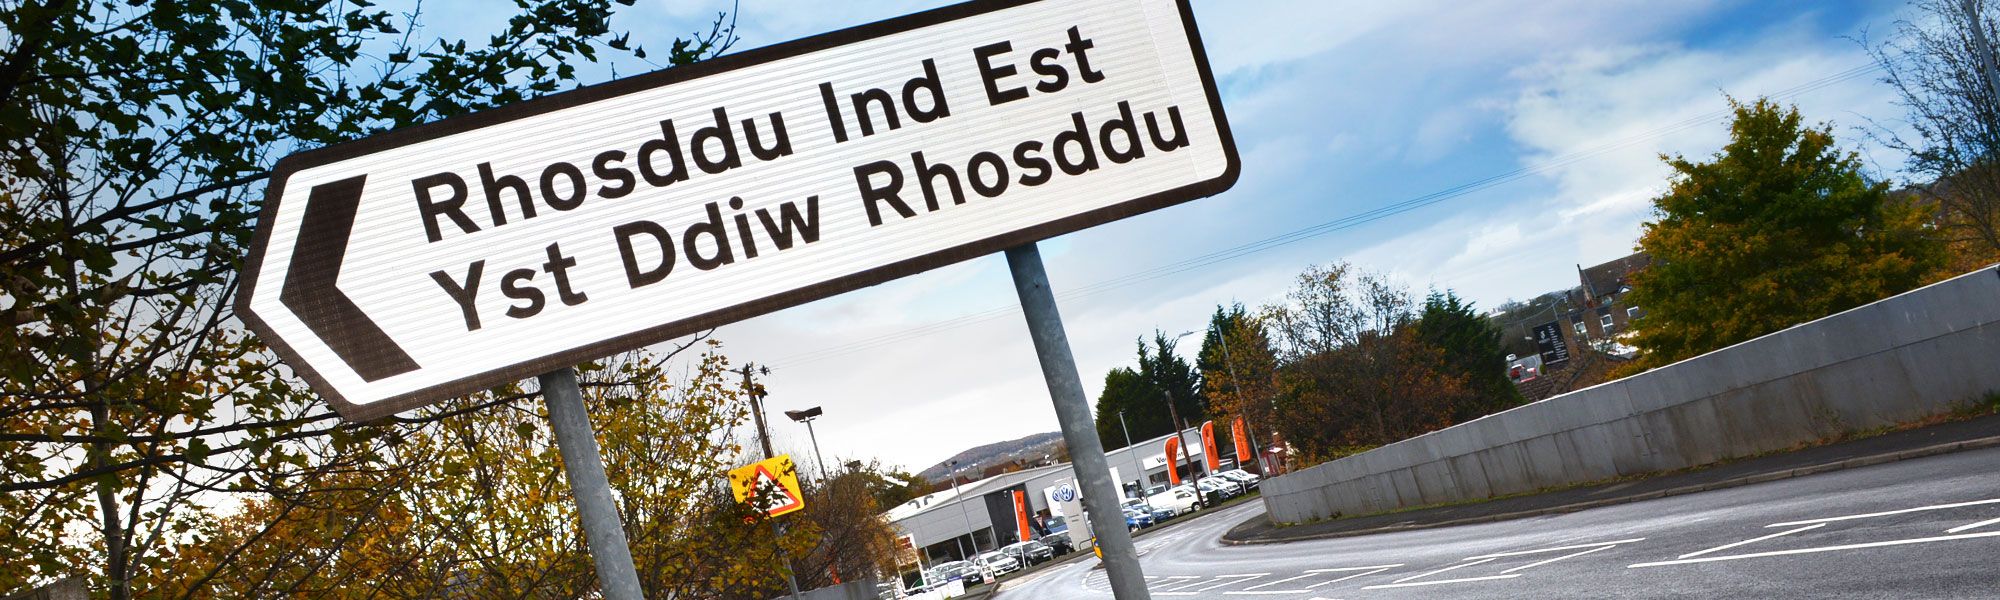 Signpost for Rhosddu Industrial Estate, Wrexham